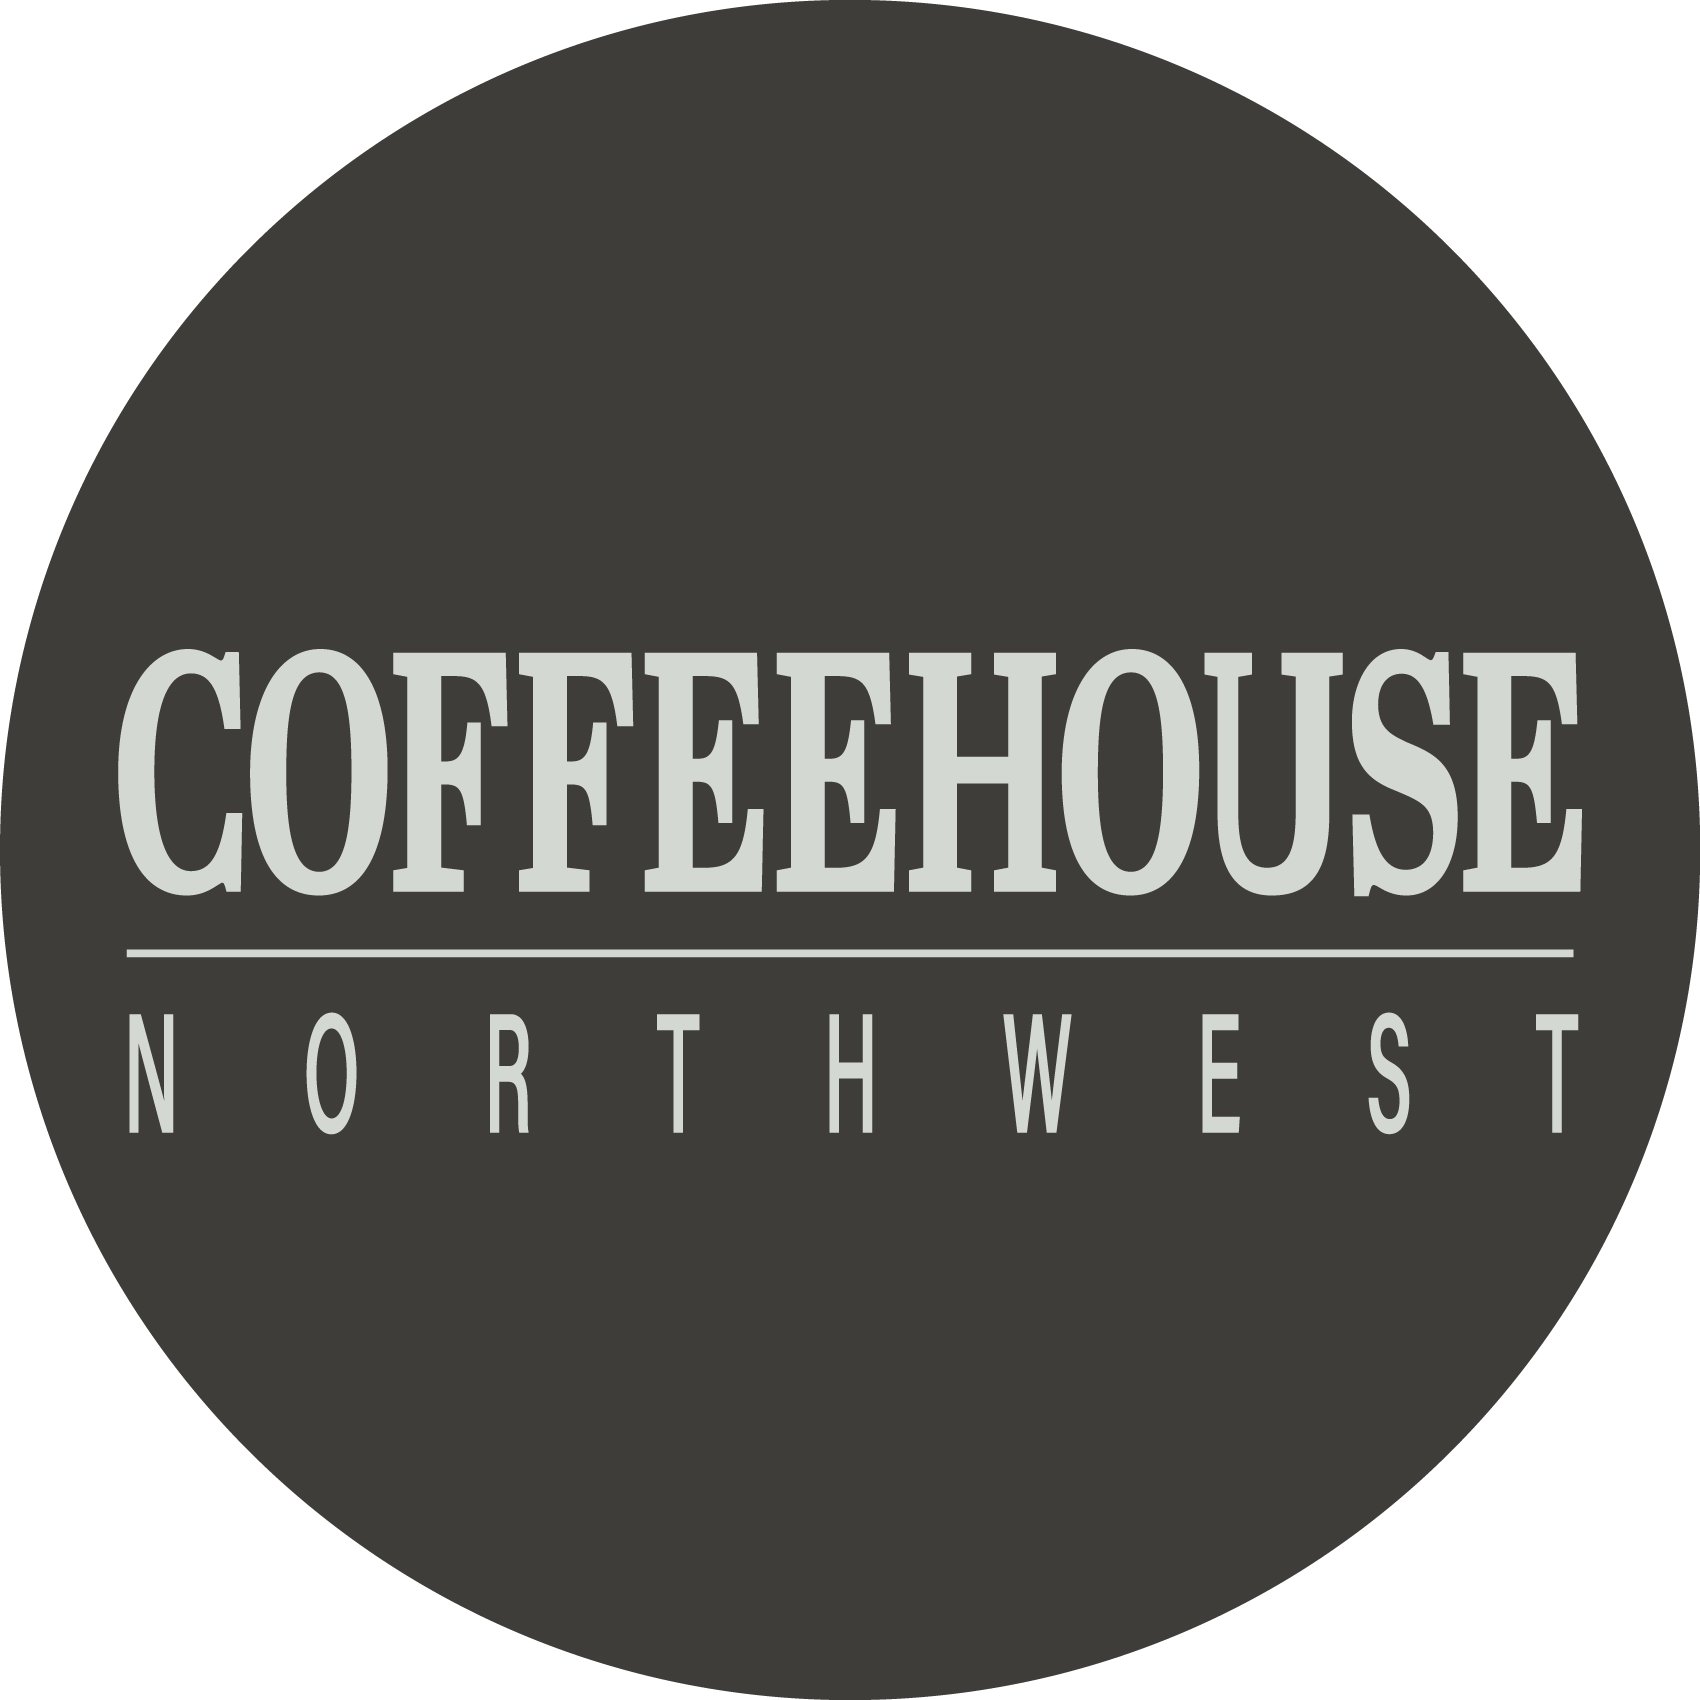 Coffeehouse Northwest Logo